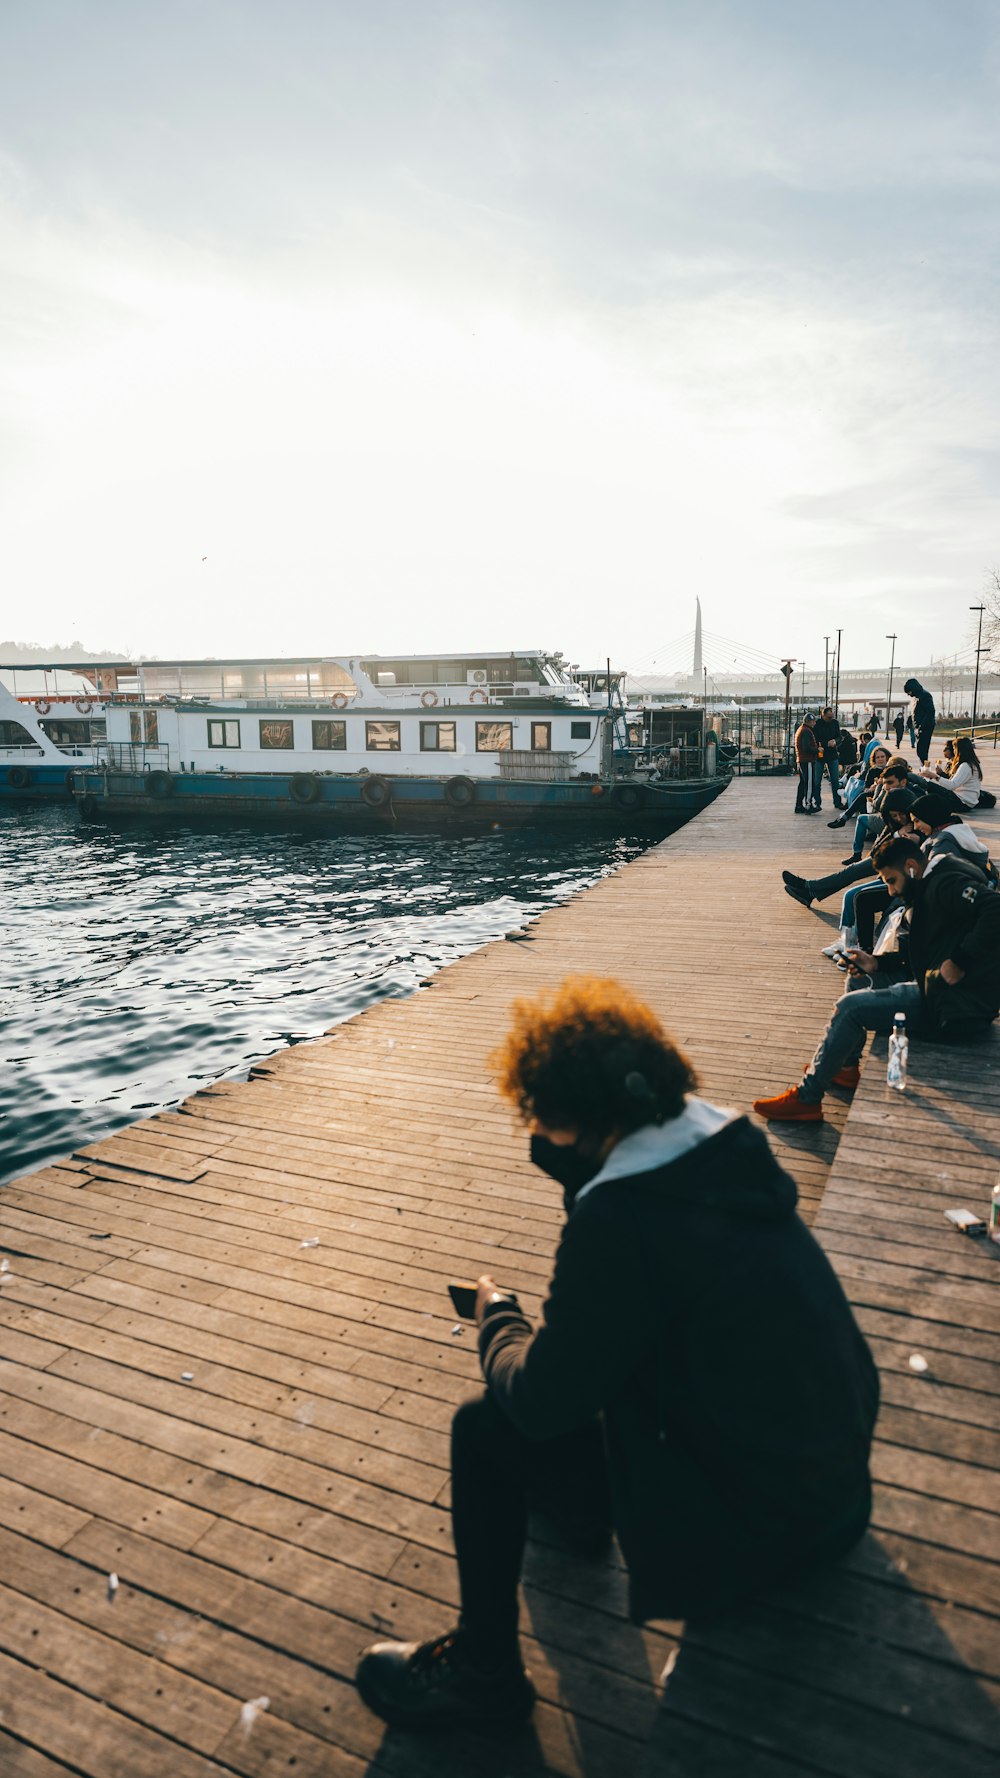 people walking on wooden dock during daytime